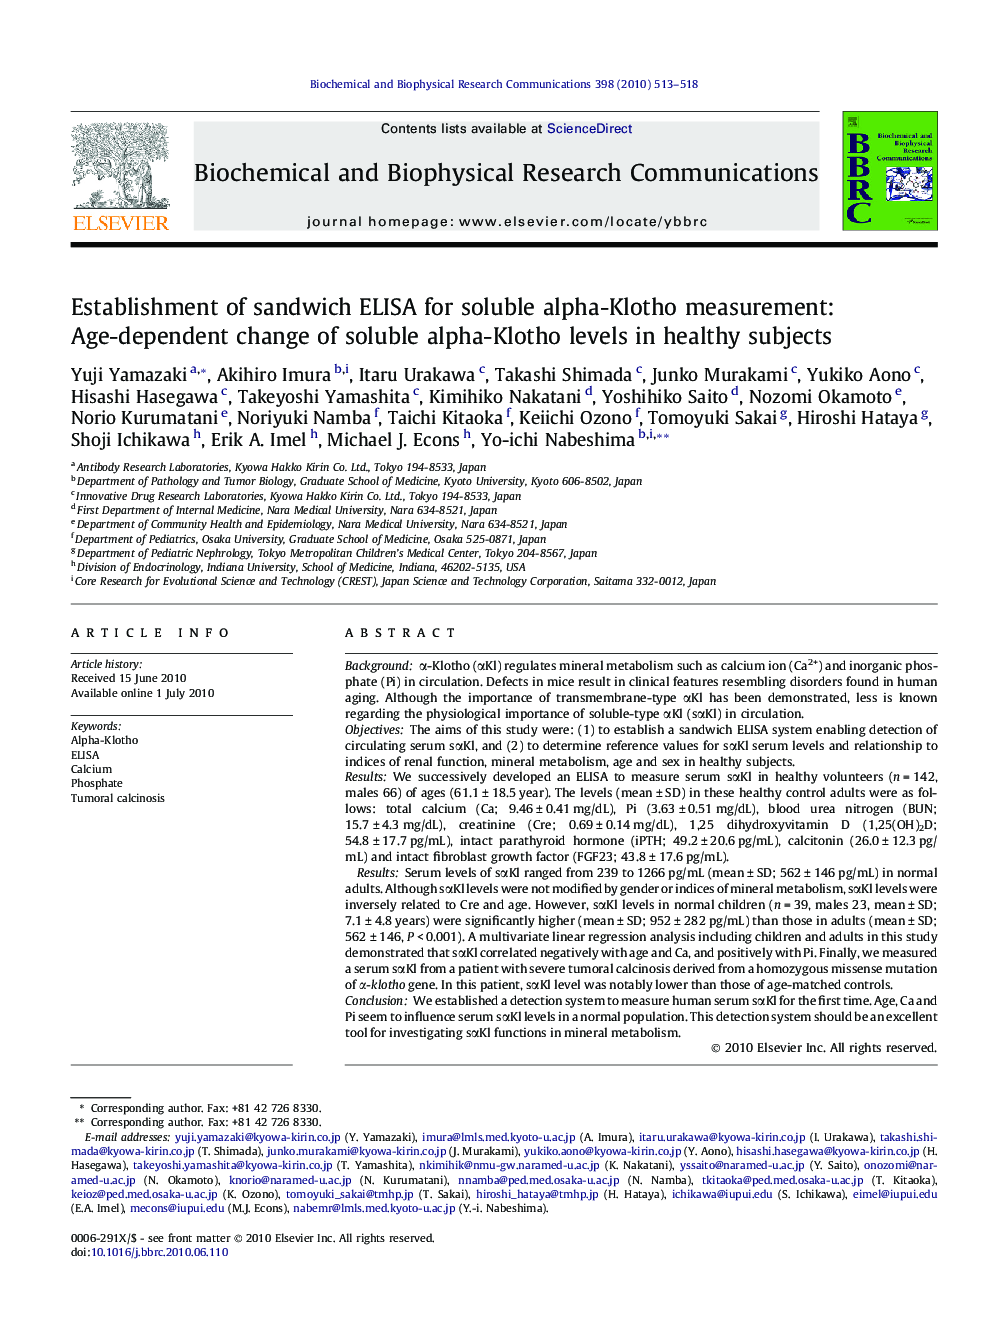 Establishment of sandwich ELISA for soluble alpha-Klotho measurement: Age-dependent change of soluble alpha-Klotho levels in healthy subjects